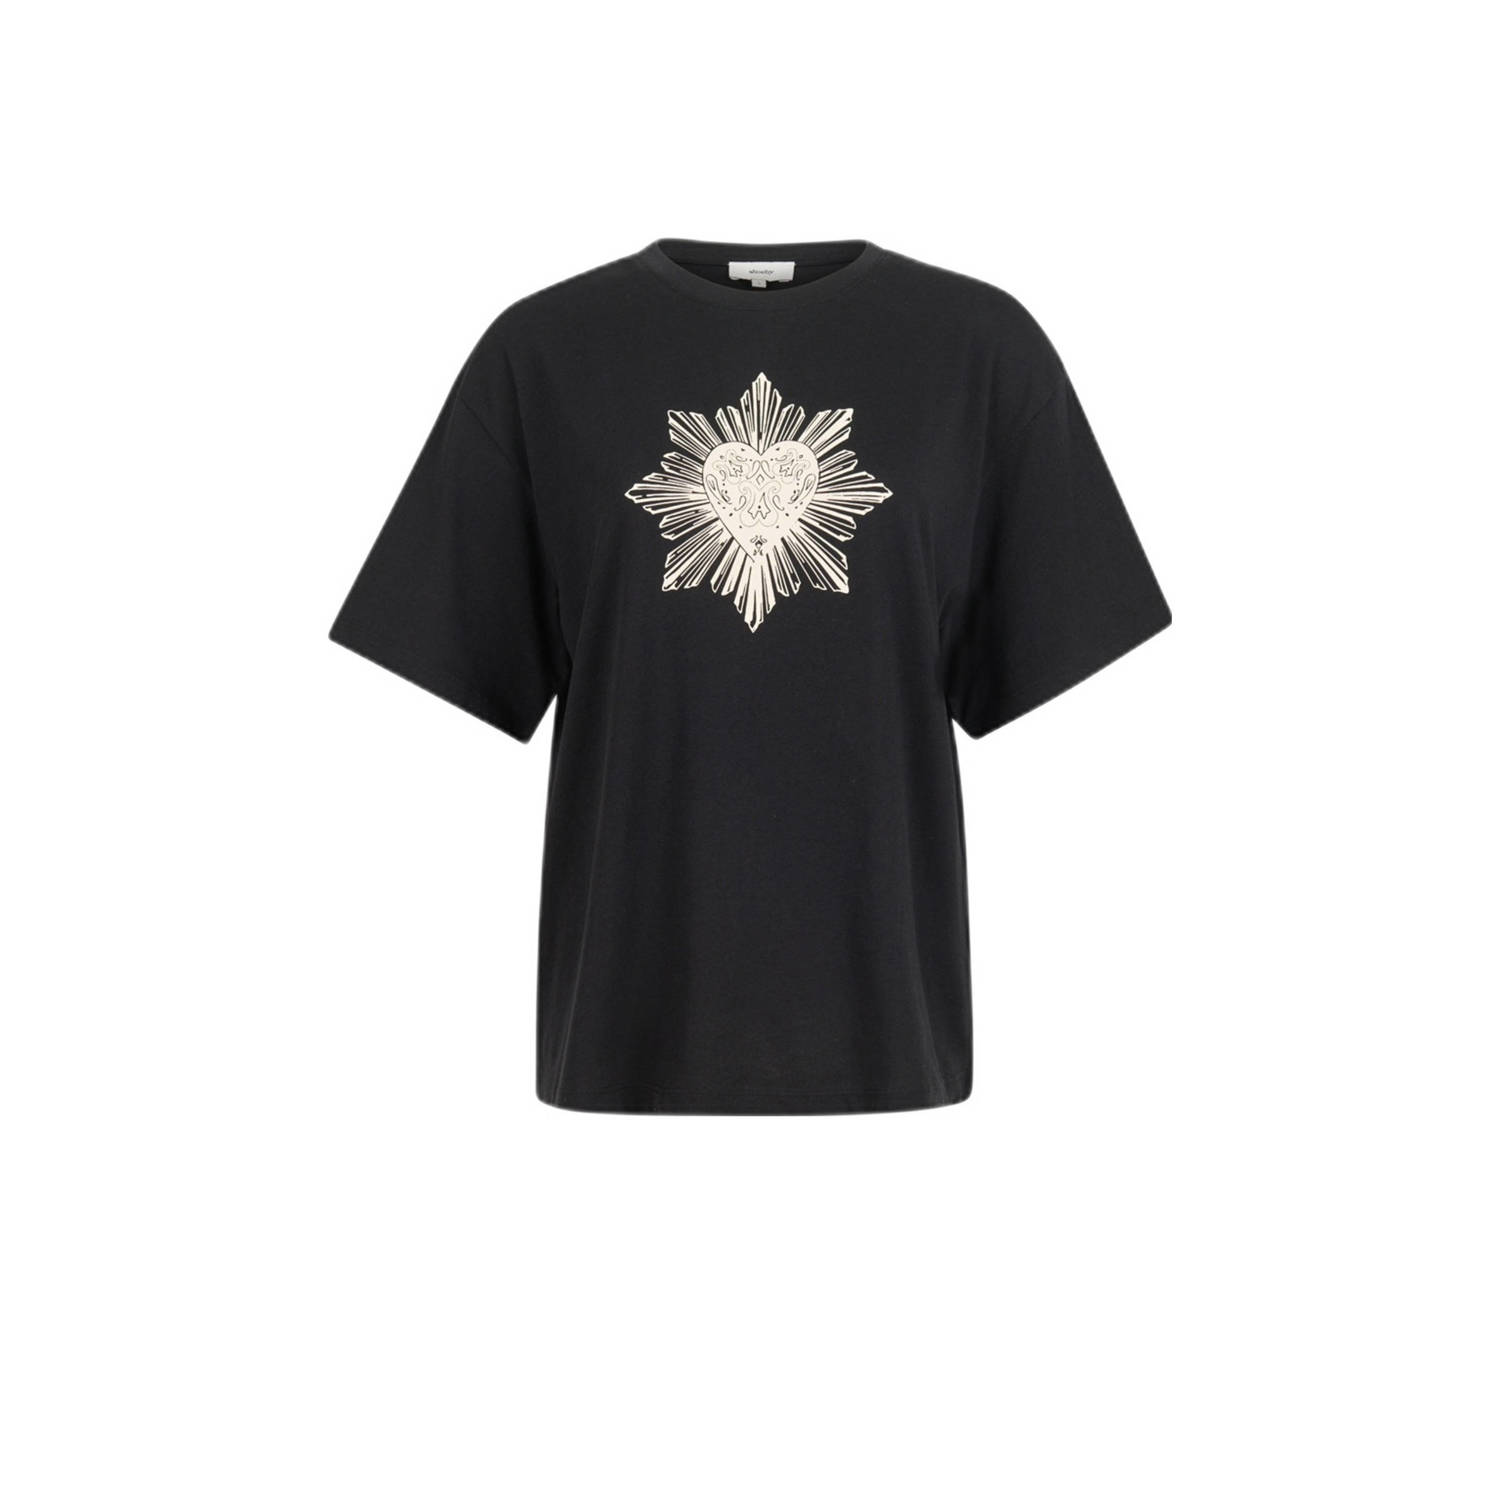 Shoeby T-shirt met printopdruk zwart ecru